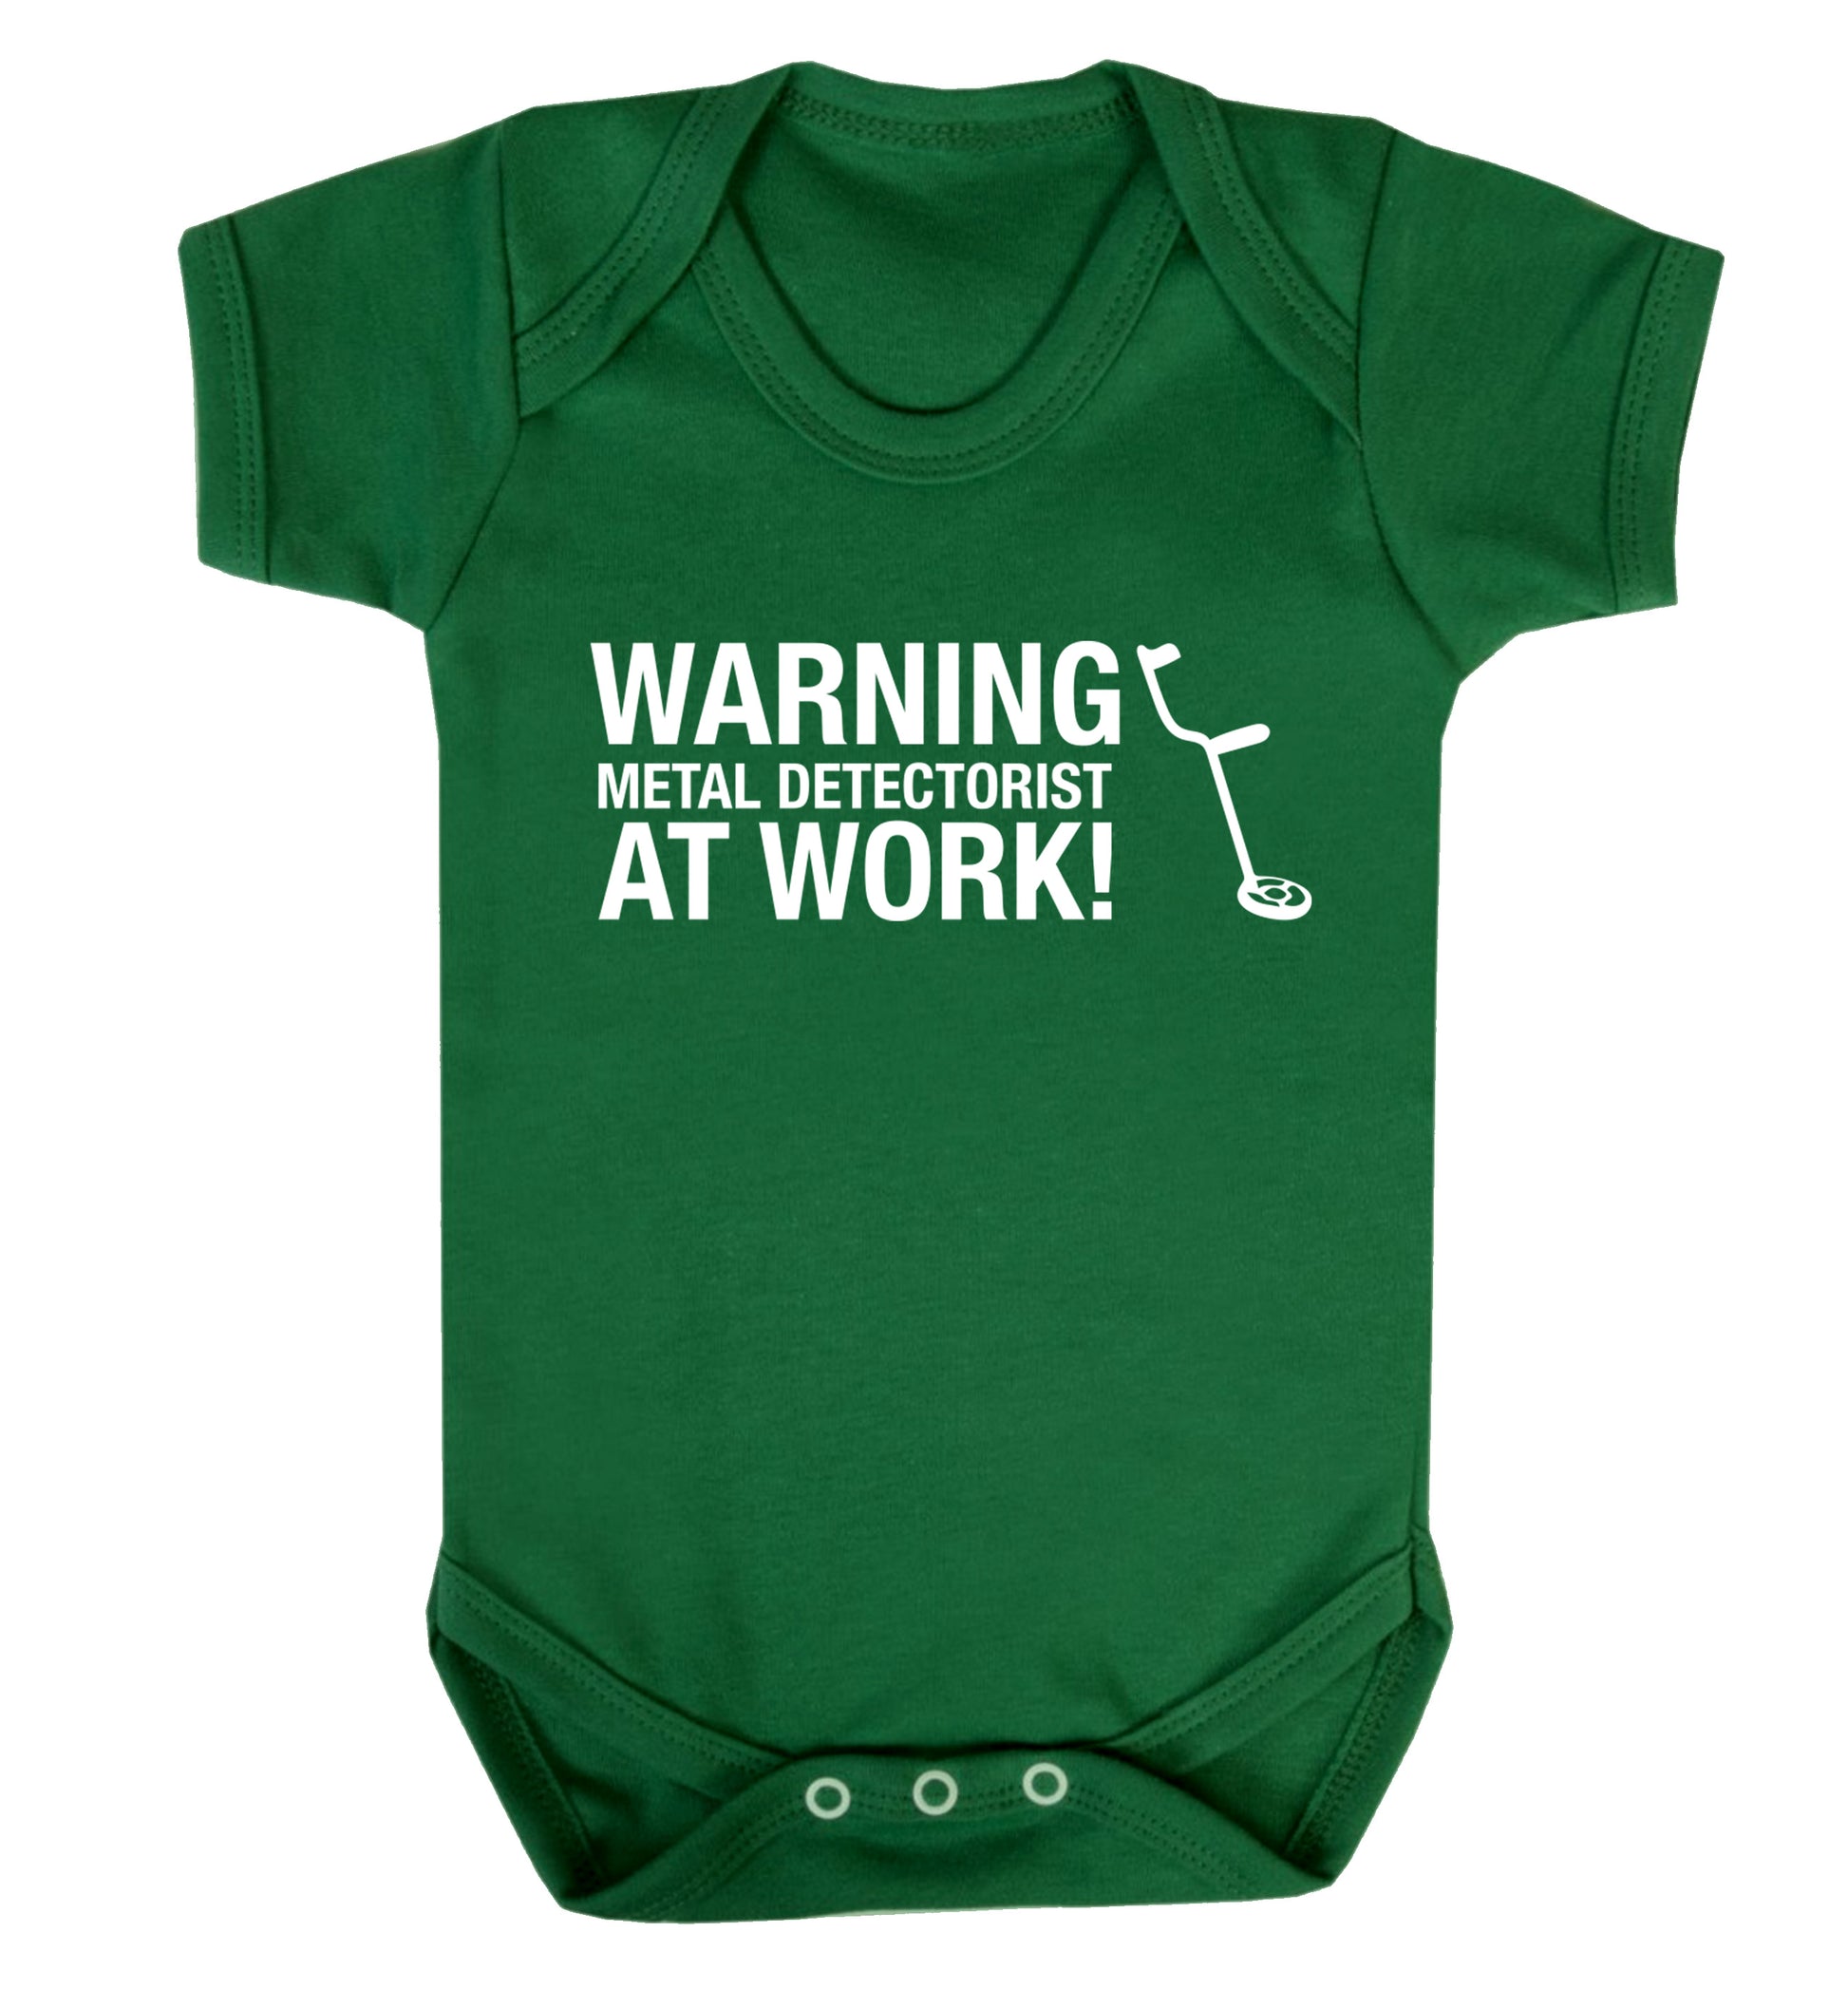 Warning metal detectorist at work! Baby Vest green 18-24 months